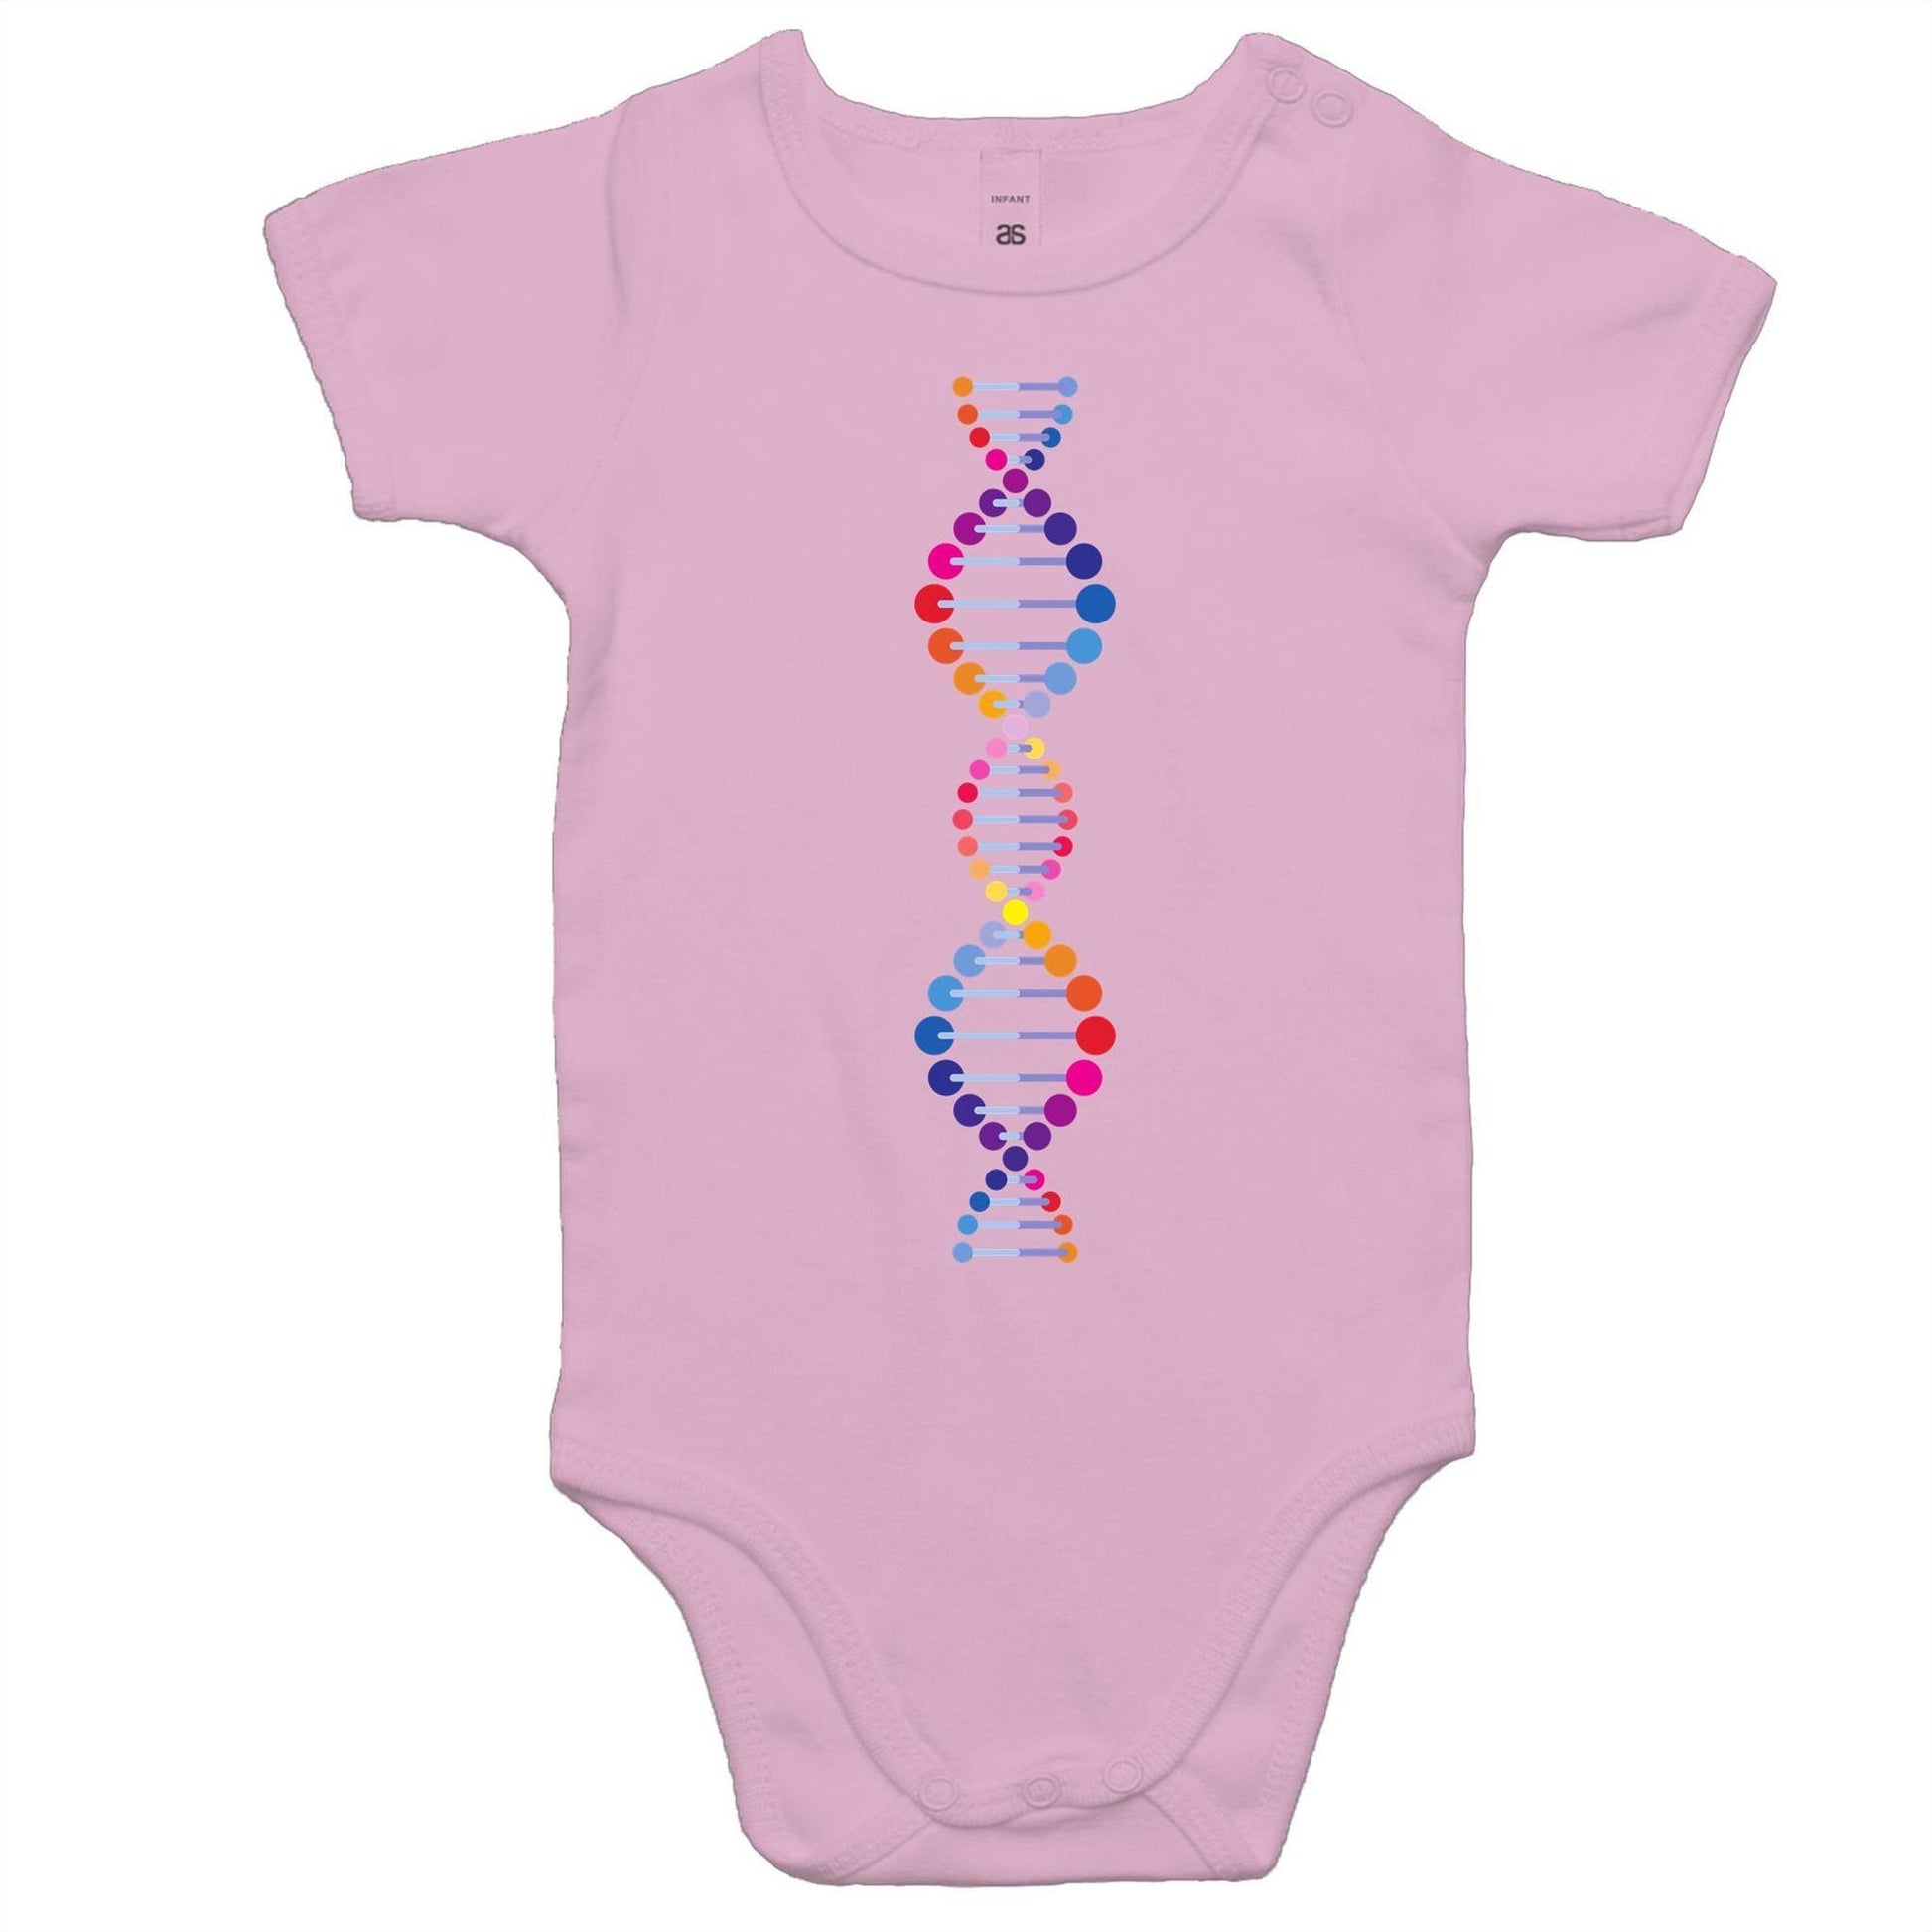 DNA - Baby Bodysuit Pink Baby Bodysuit kids Science